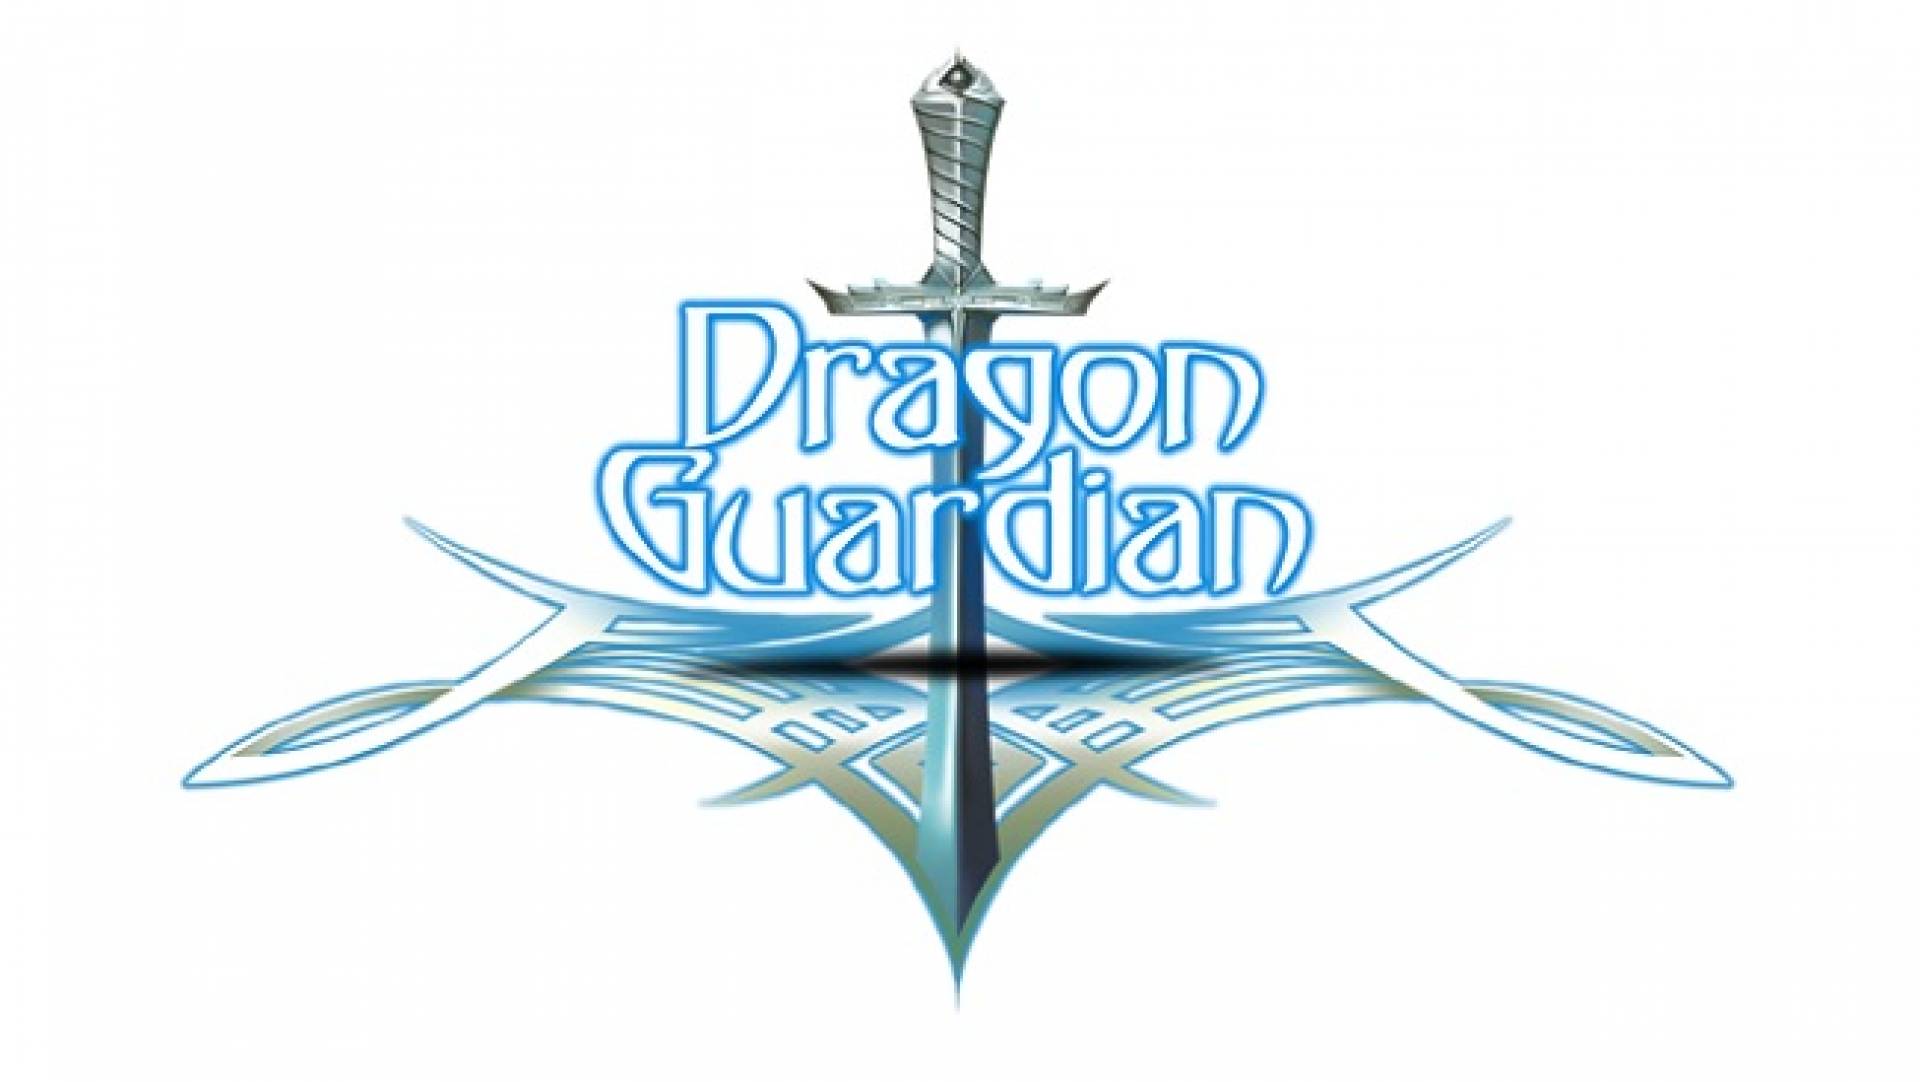 Dragon Guardian